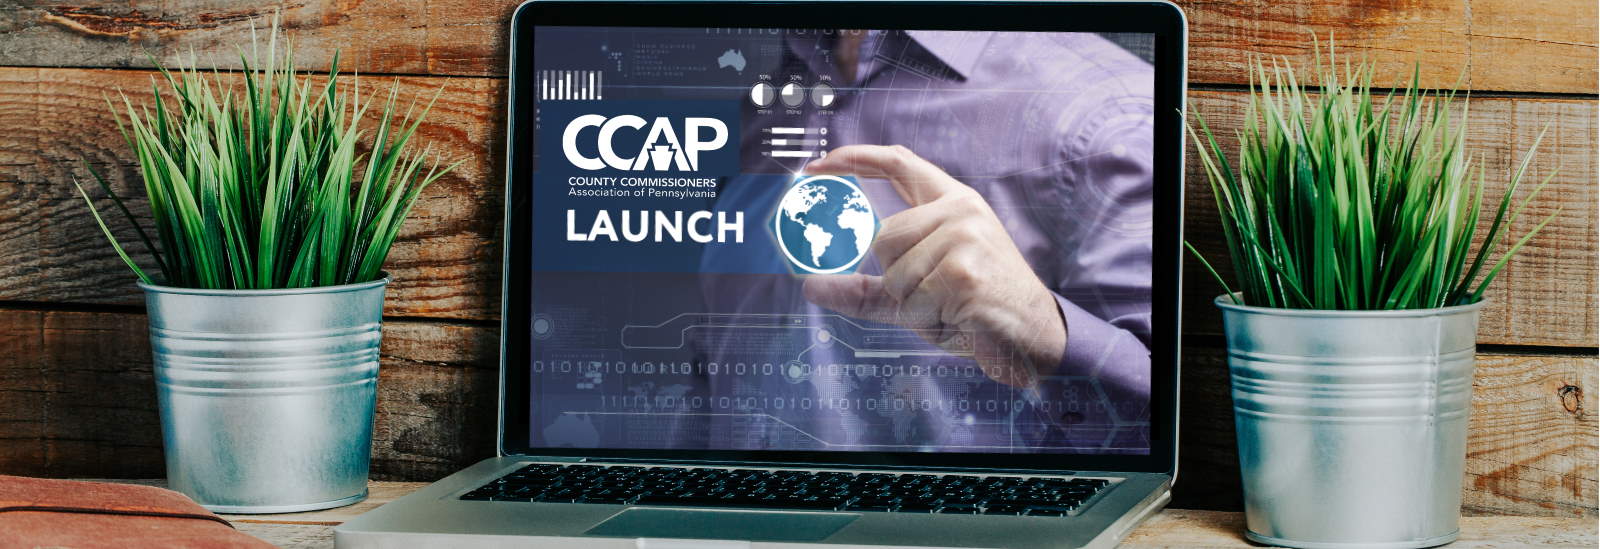 CCAP Launches New Website